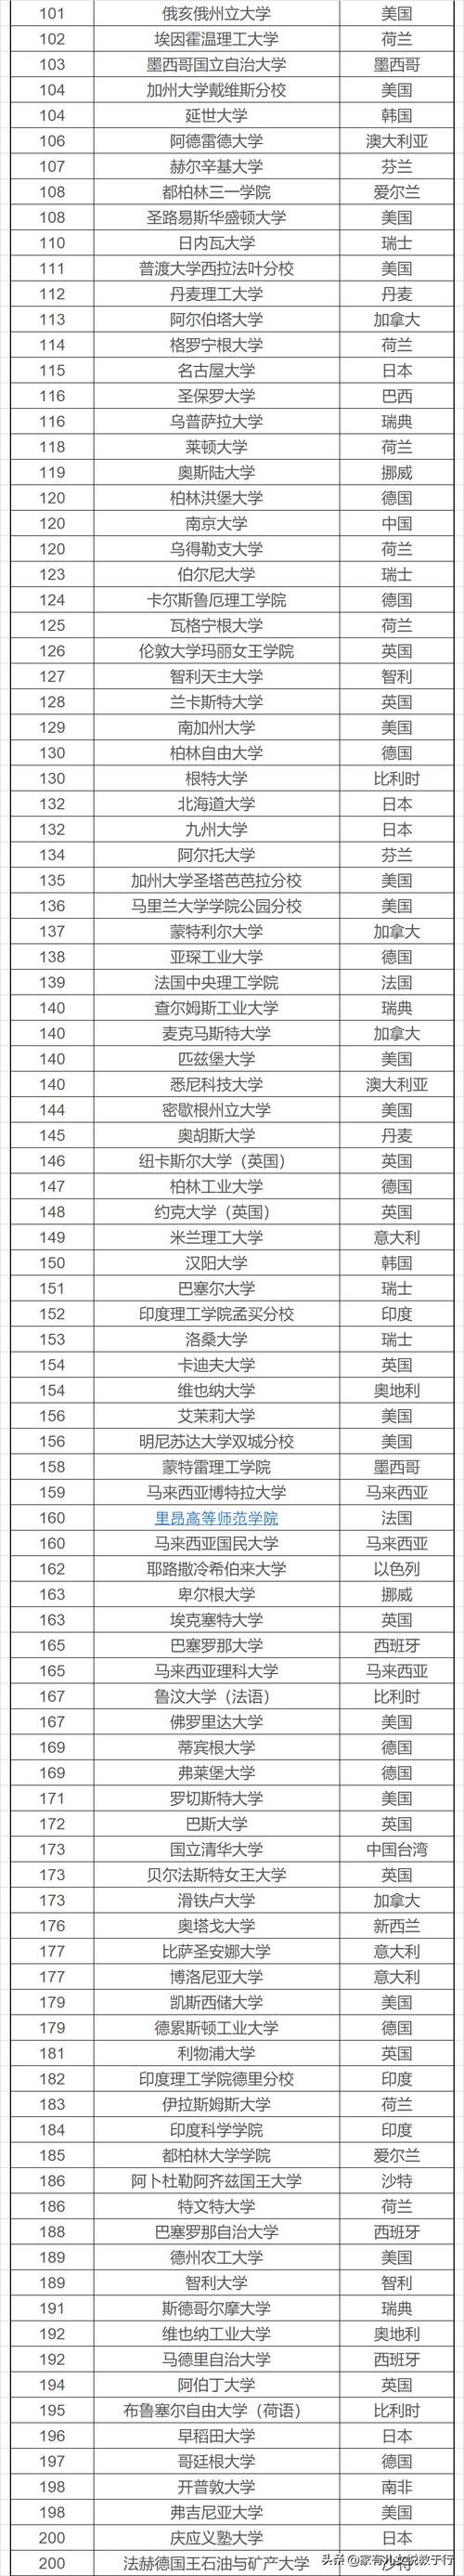 2020qs世界大学排名1000强榜单中文版(最新完整版)